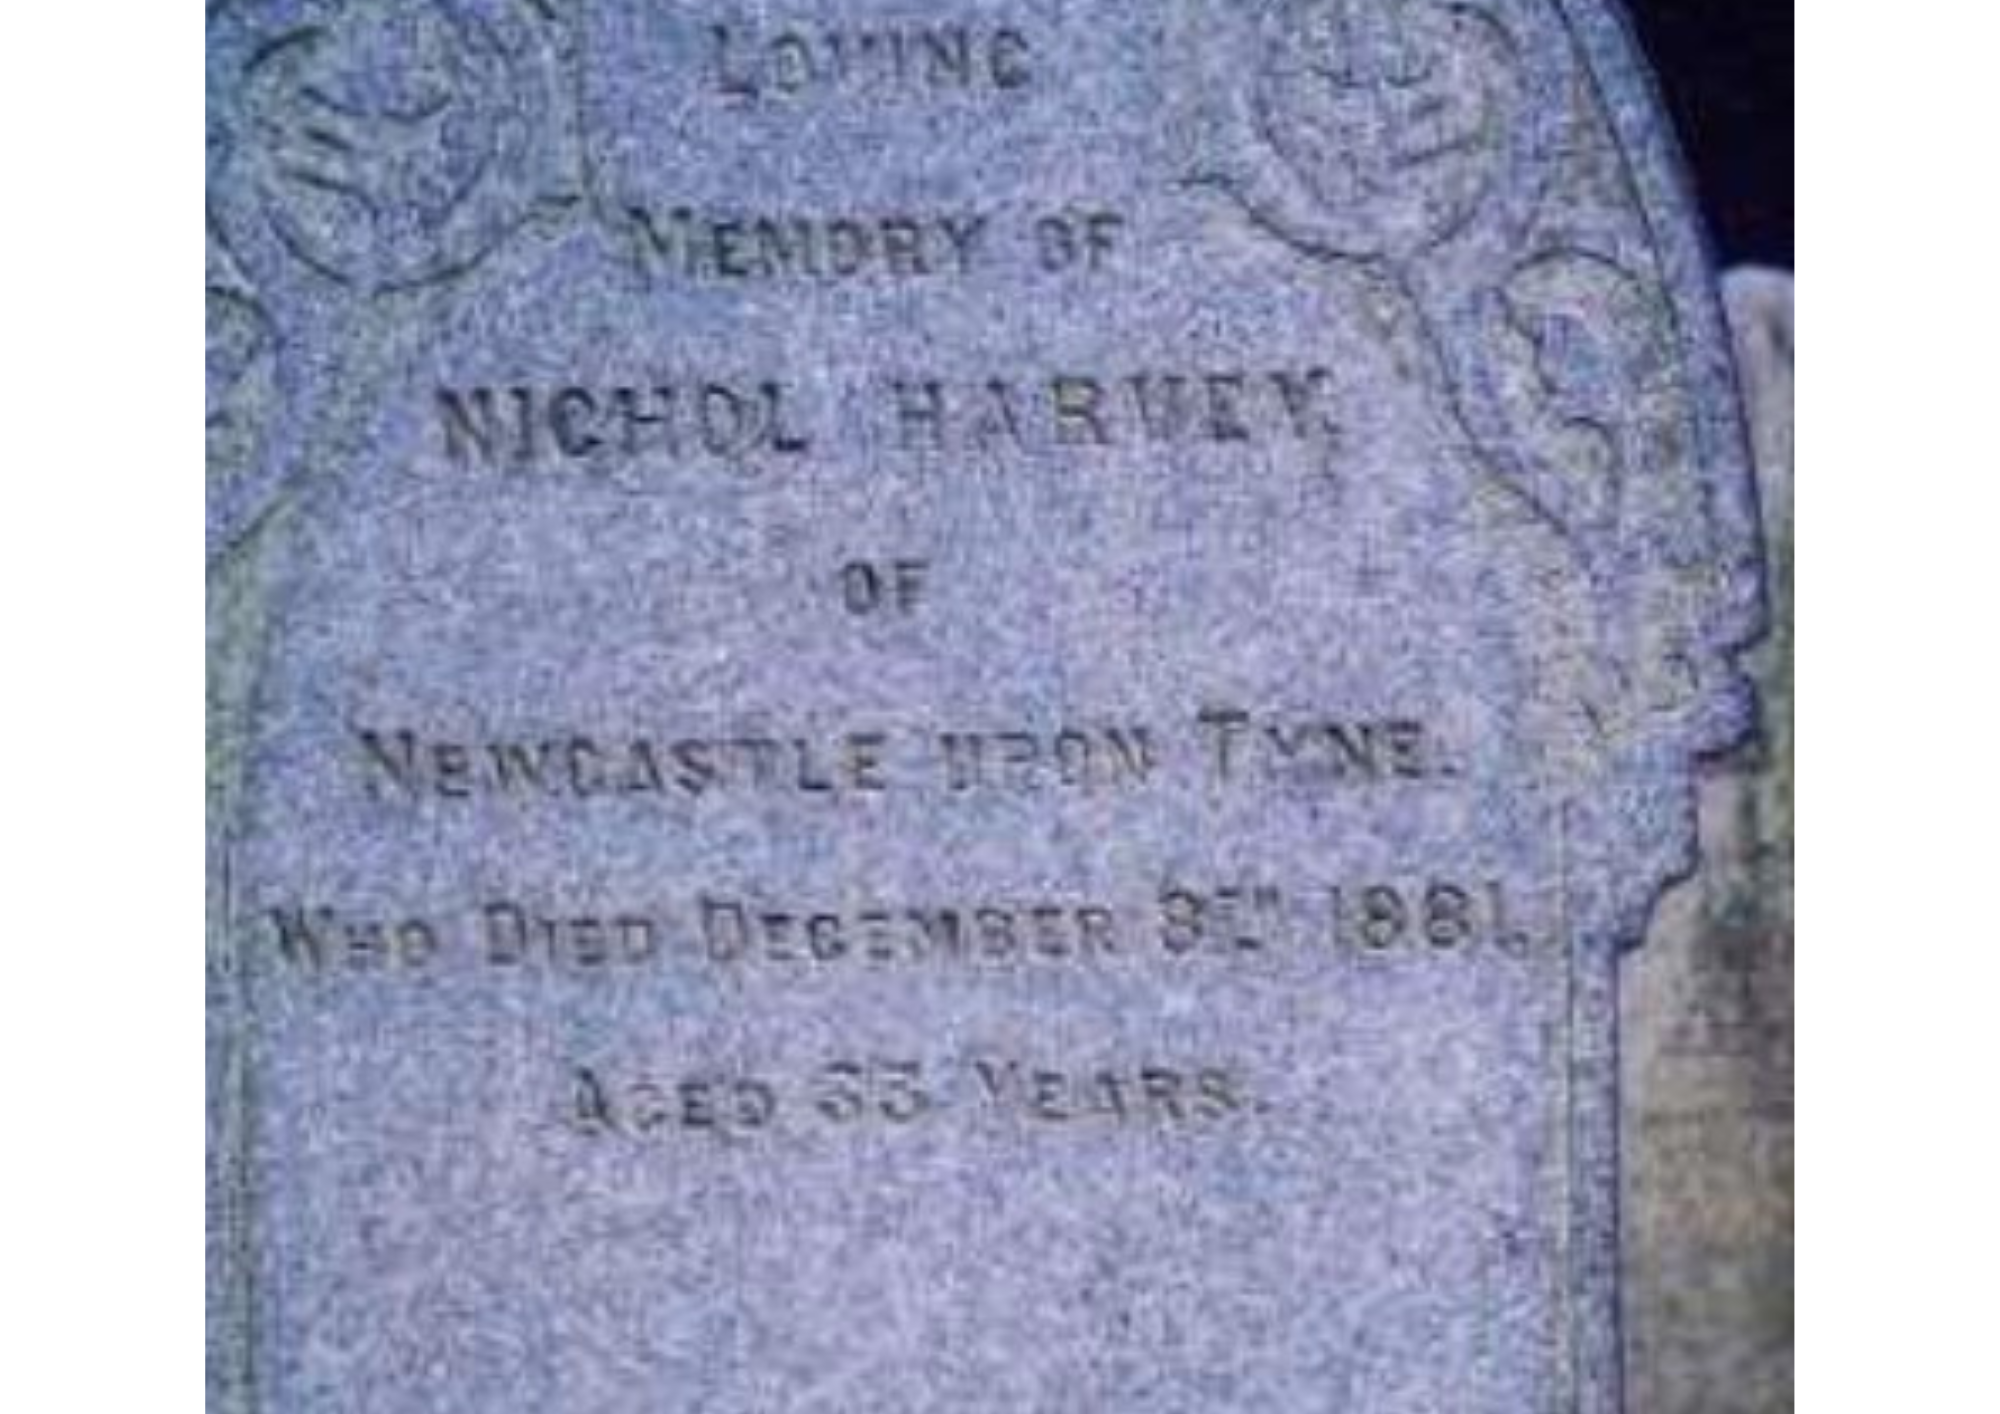 tombstone of Nichol Harvey, a Freemason buried in Hong Kong 